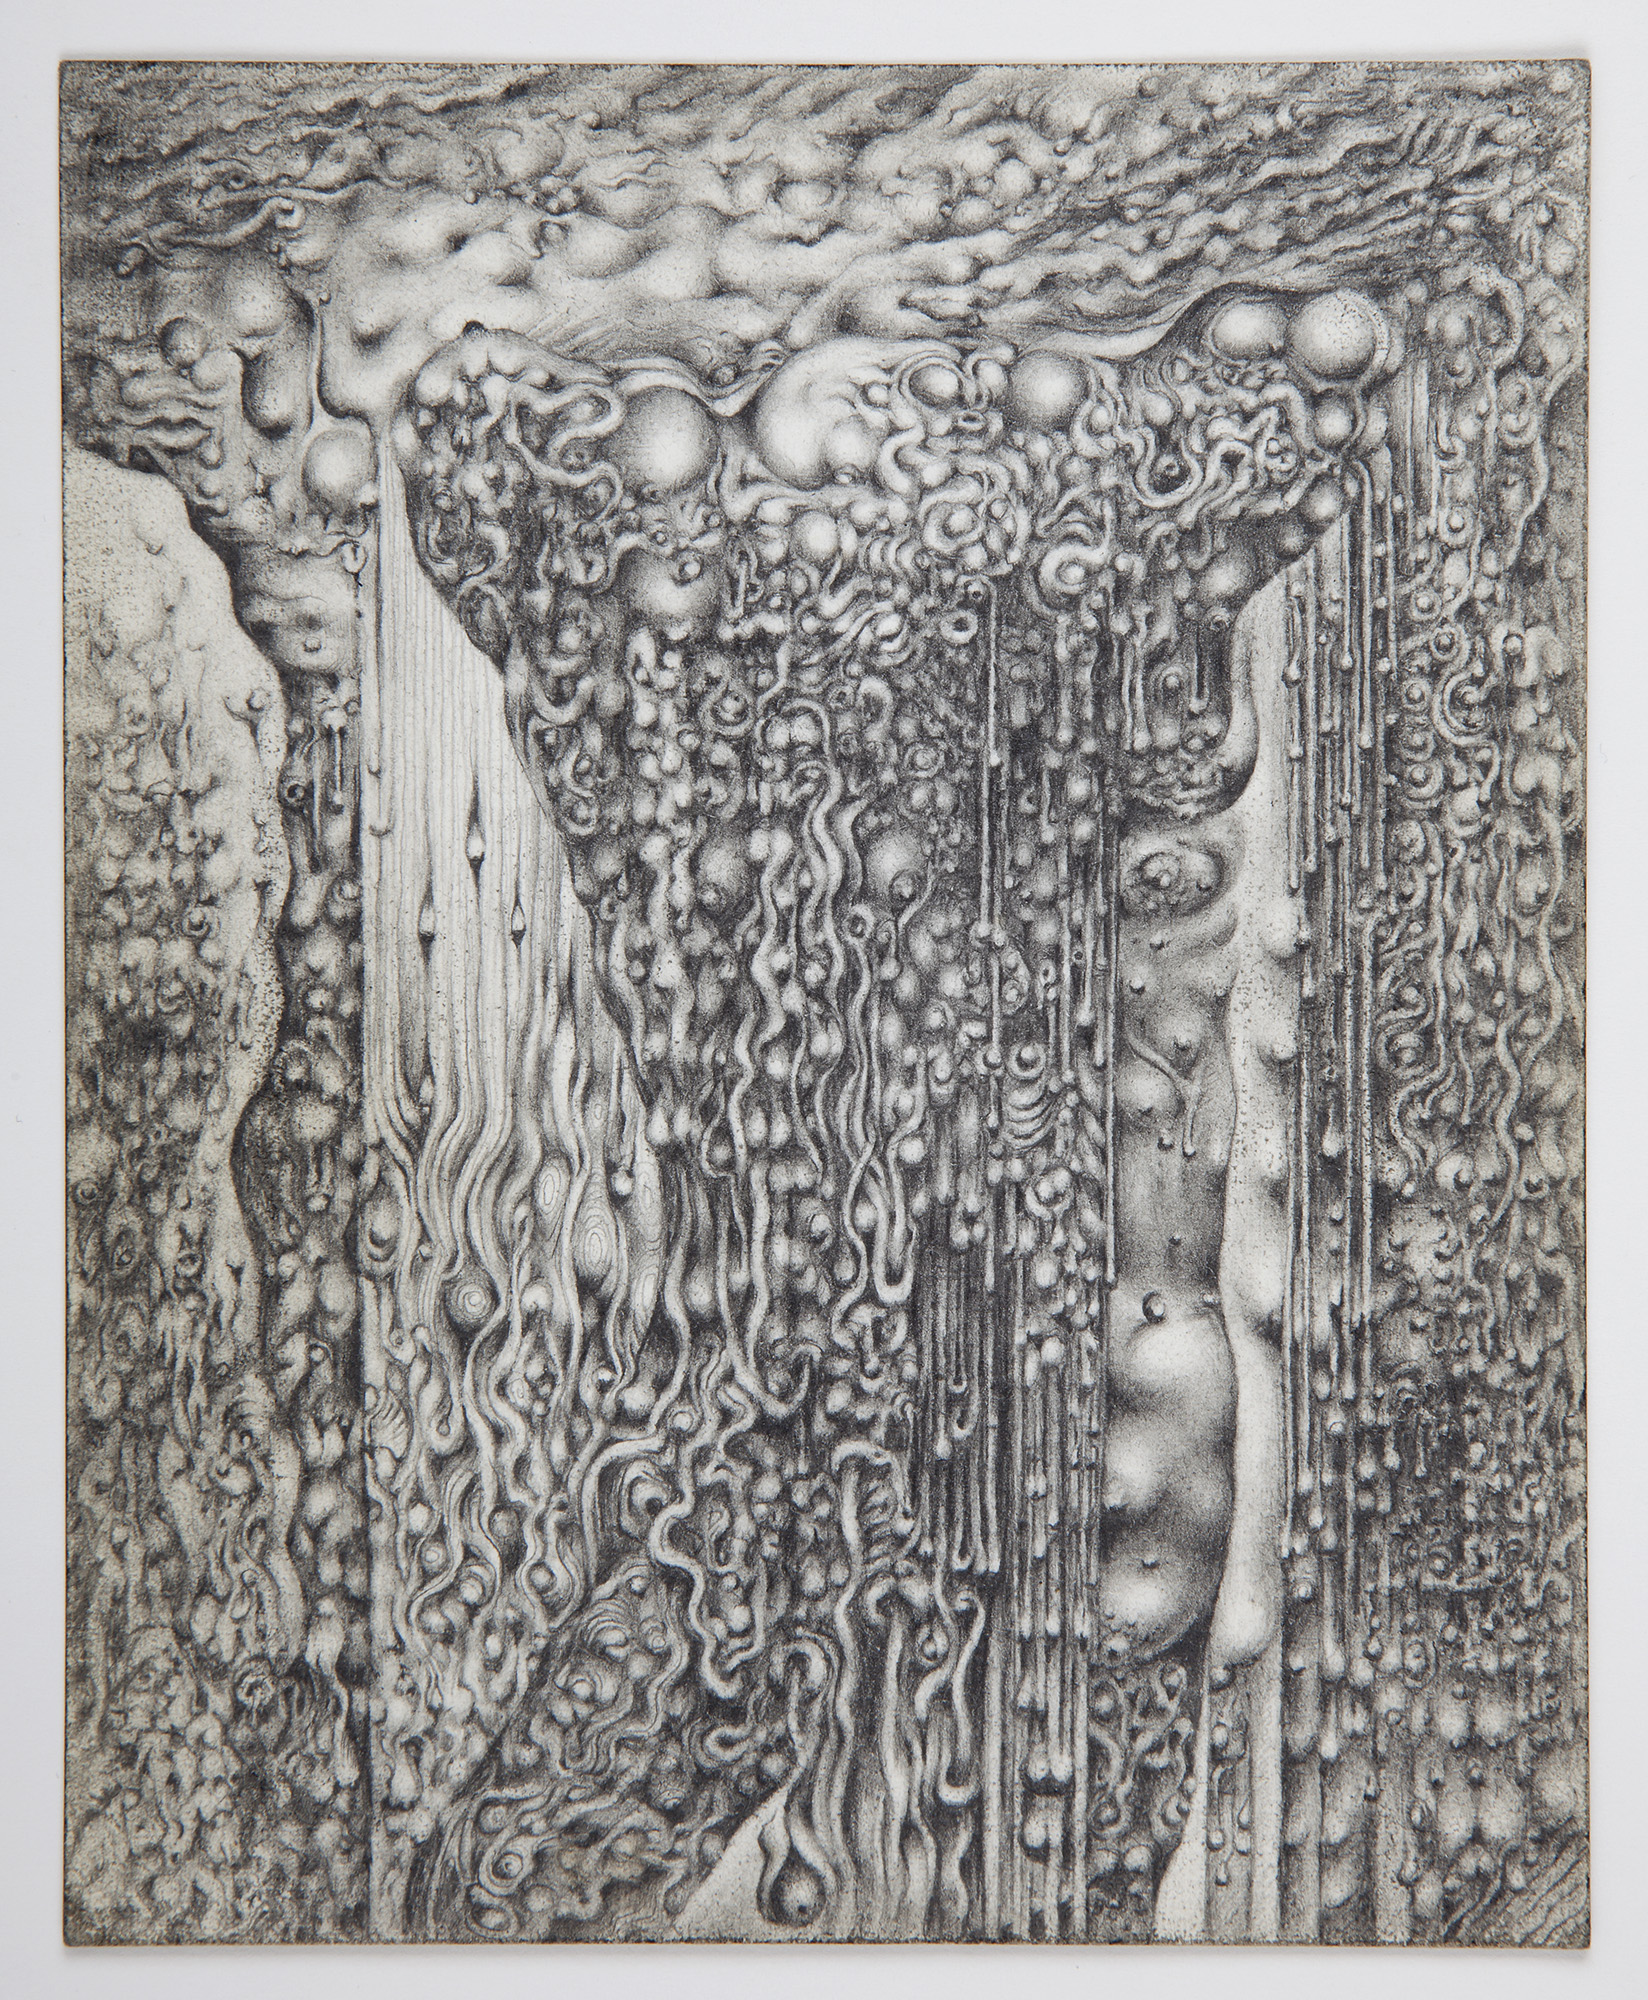 The Nature Drawings of Peter Karklins | Exhibitions | DePaul Art Museum ...